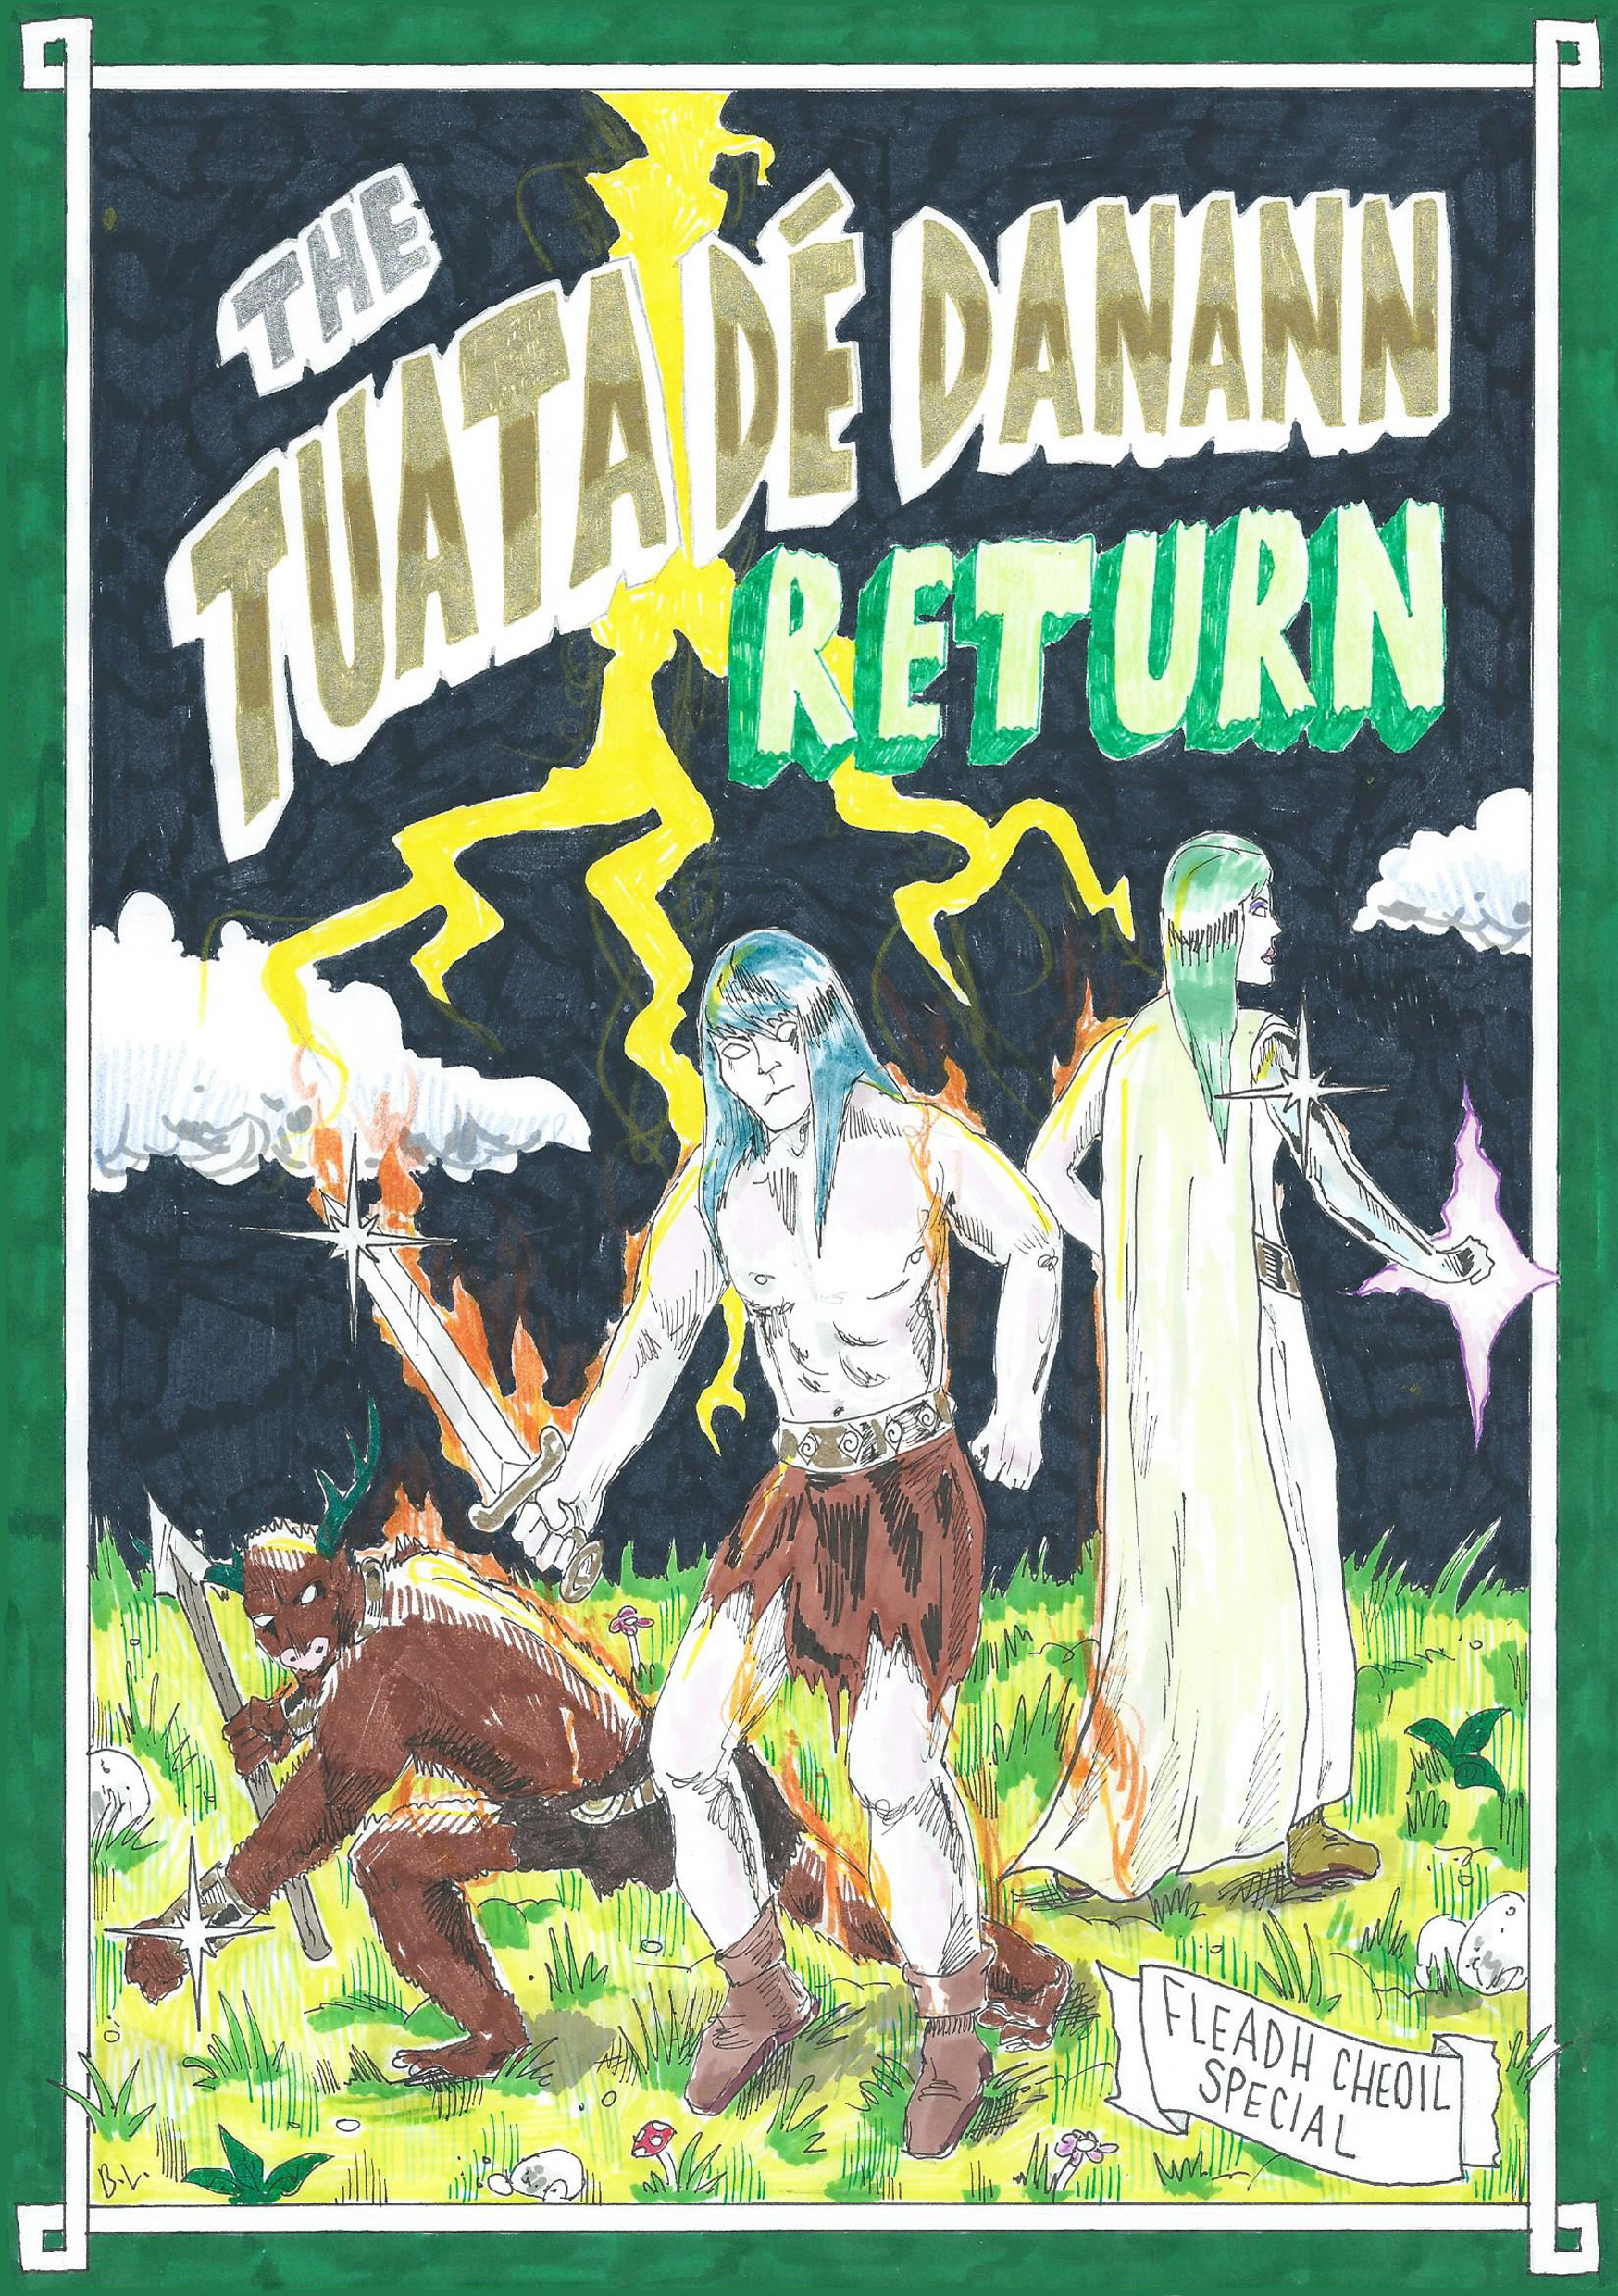 The Tuata De Danann Return cover